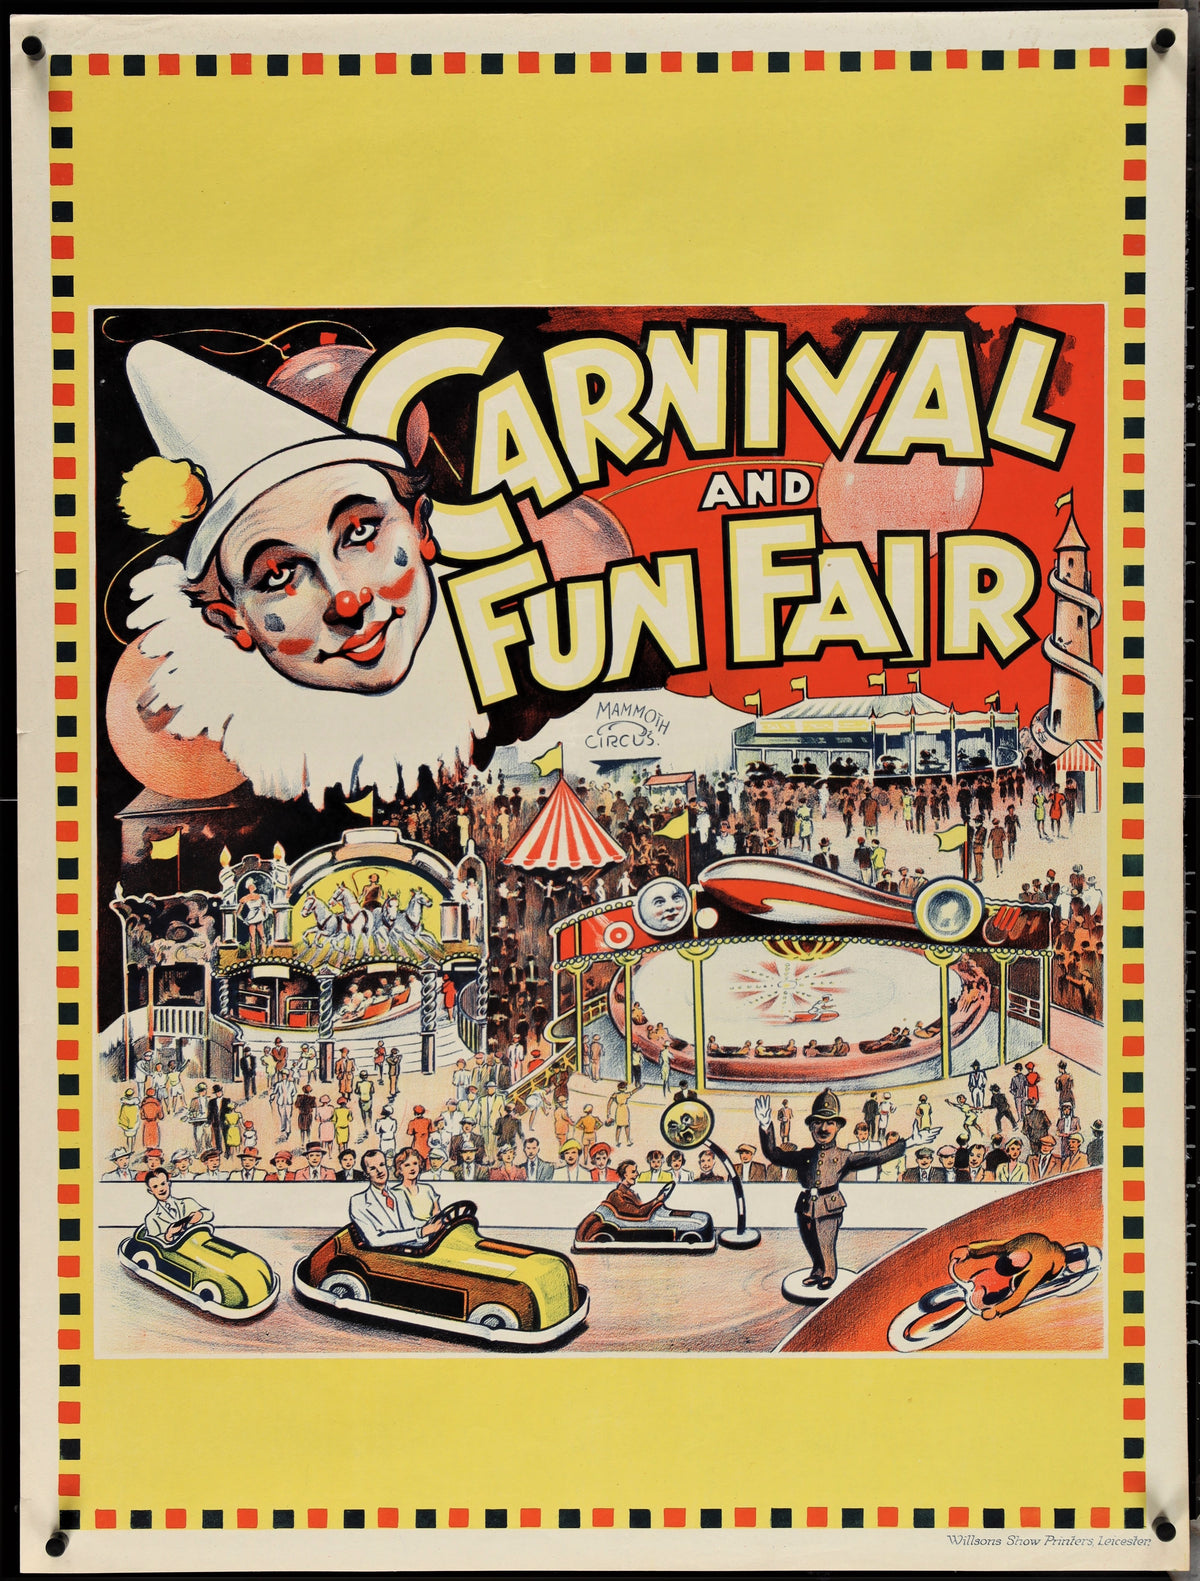 Mammoth Circus- Carnival Fun Fair - Authentic Vintage Poster